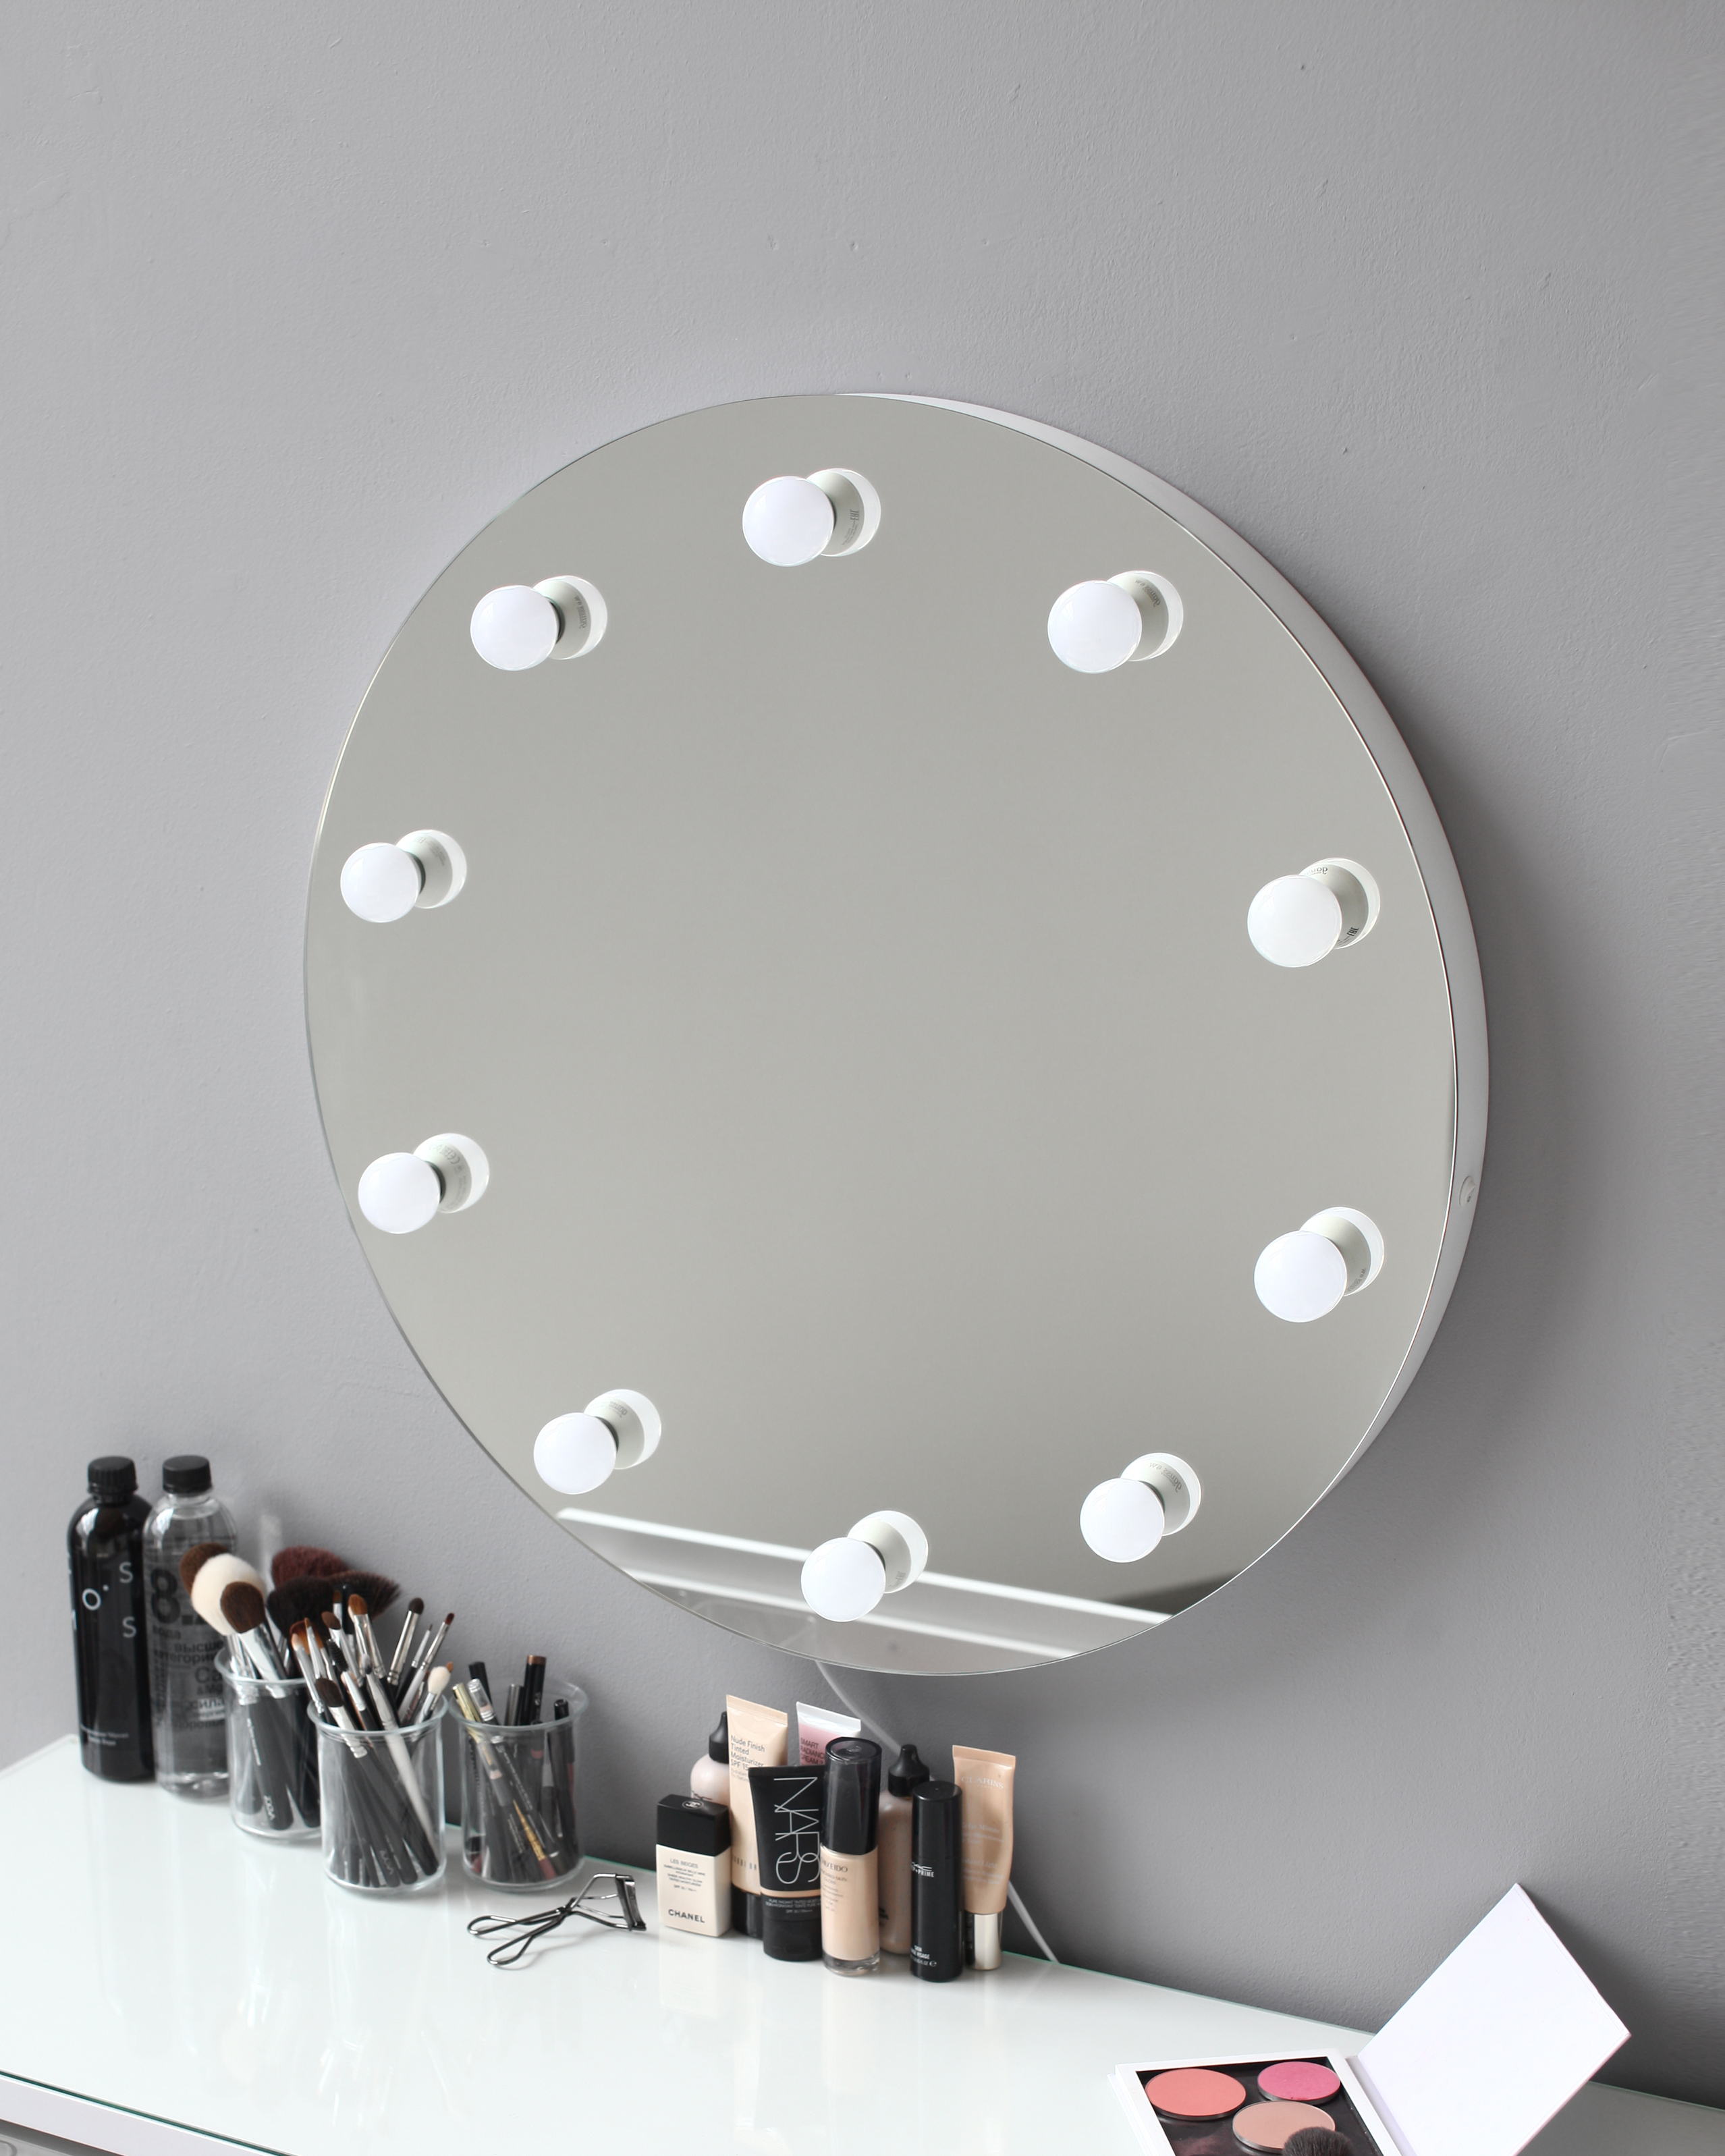 Круглое гримерное зеркало диаметр 70 см